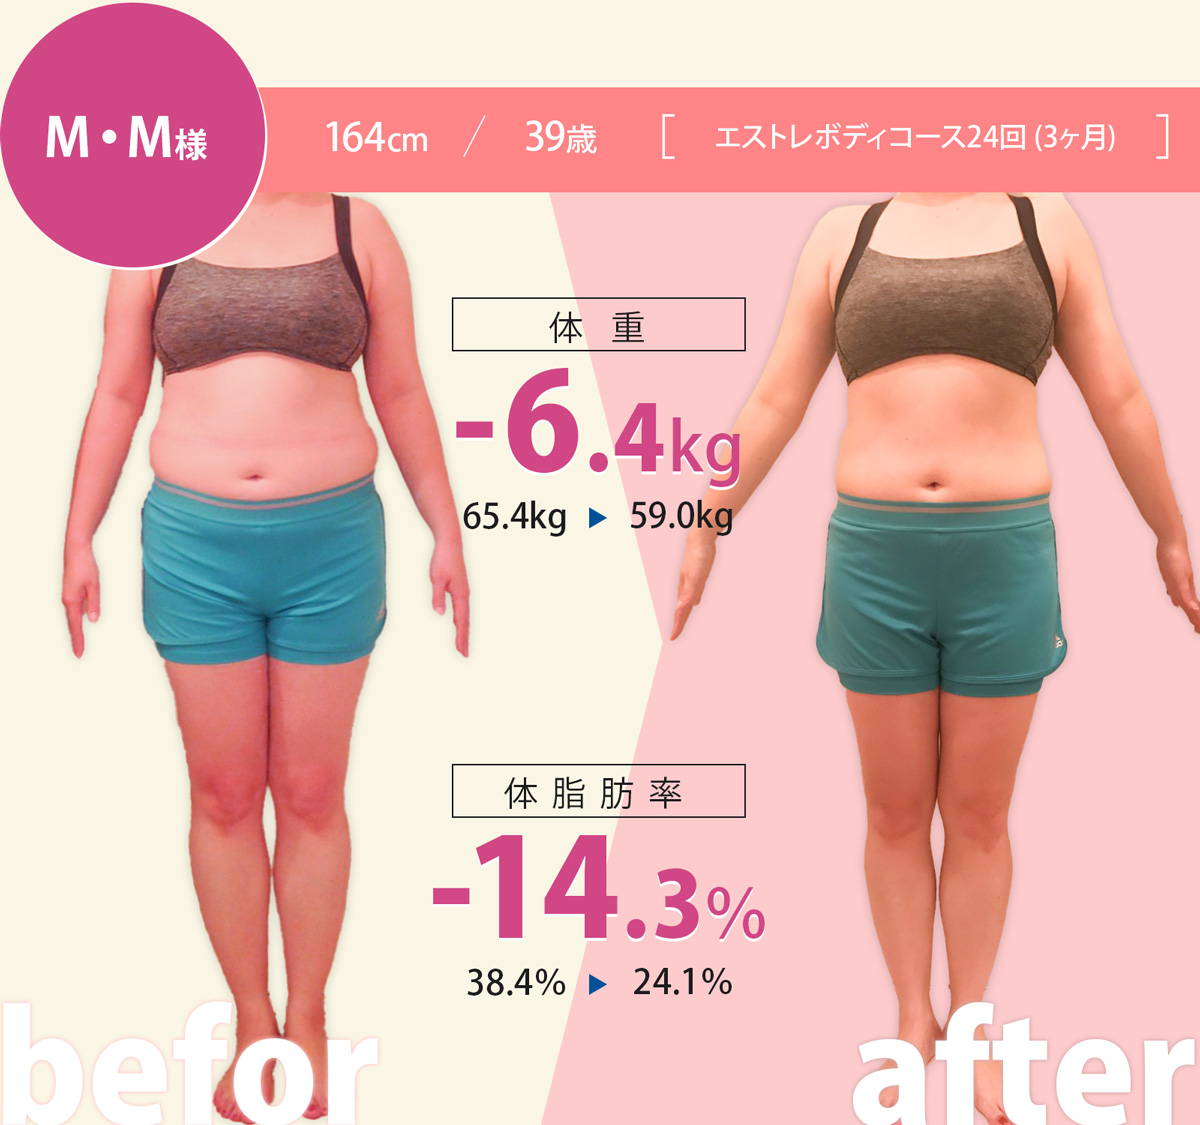 MM様 164cm/39歳エストレボディーコース24回（3ヶ月）、体重-6.4kg、体脂肪率-14.3%